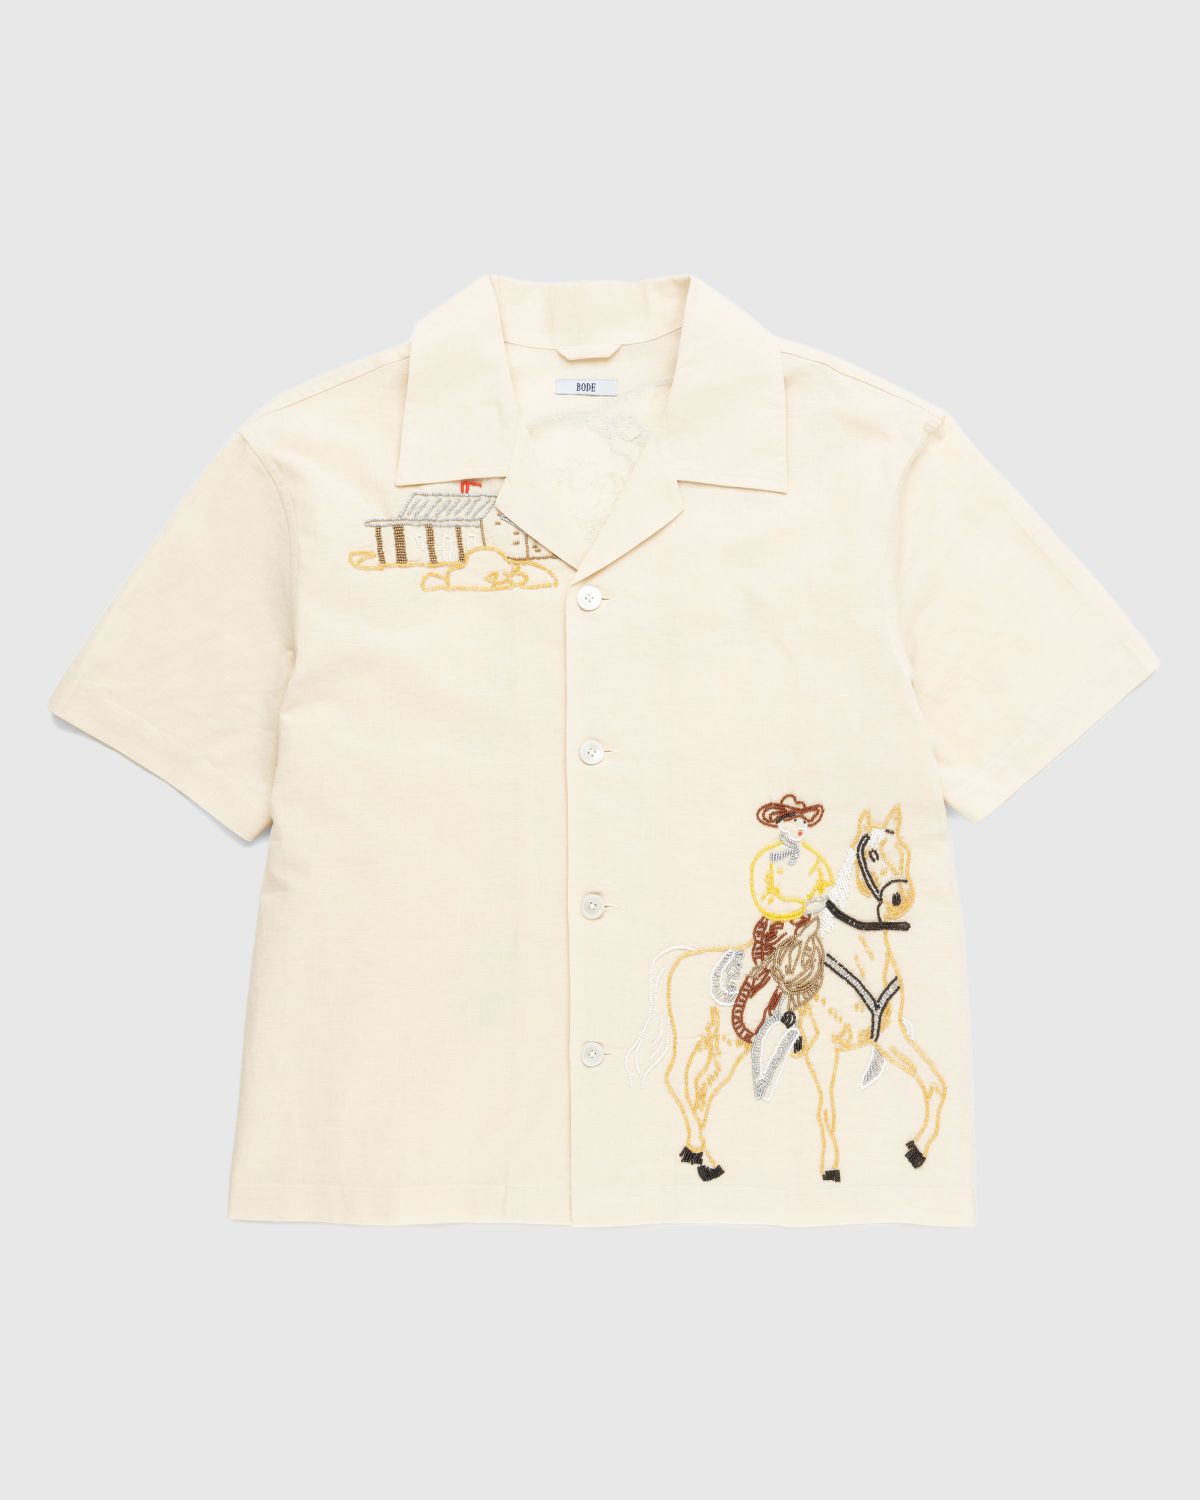 Bode – Beaded Buckaroo Shortsleeve Shirt | Highsnobiety Shop